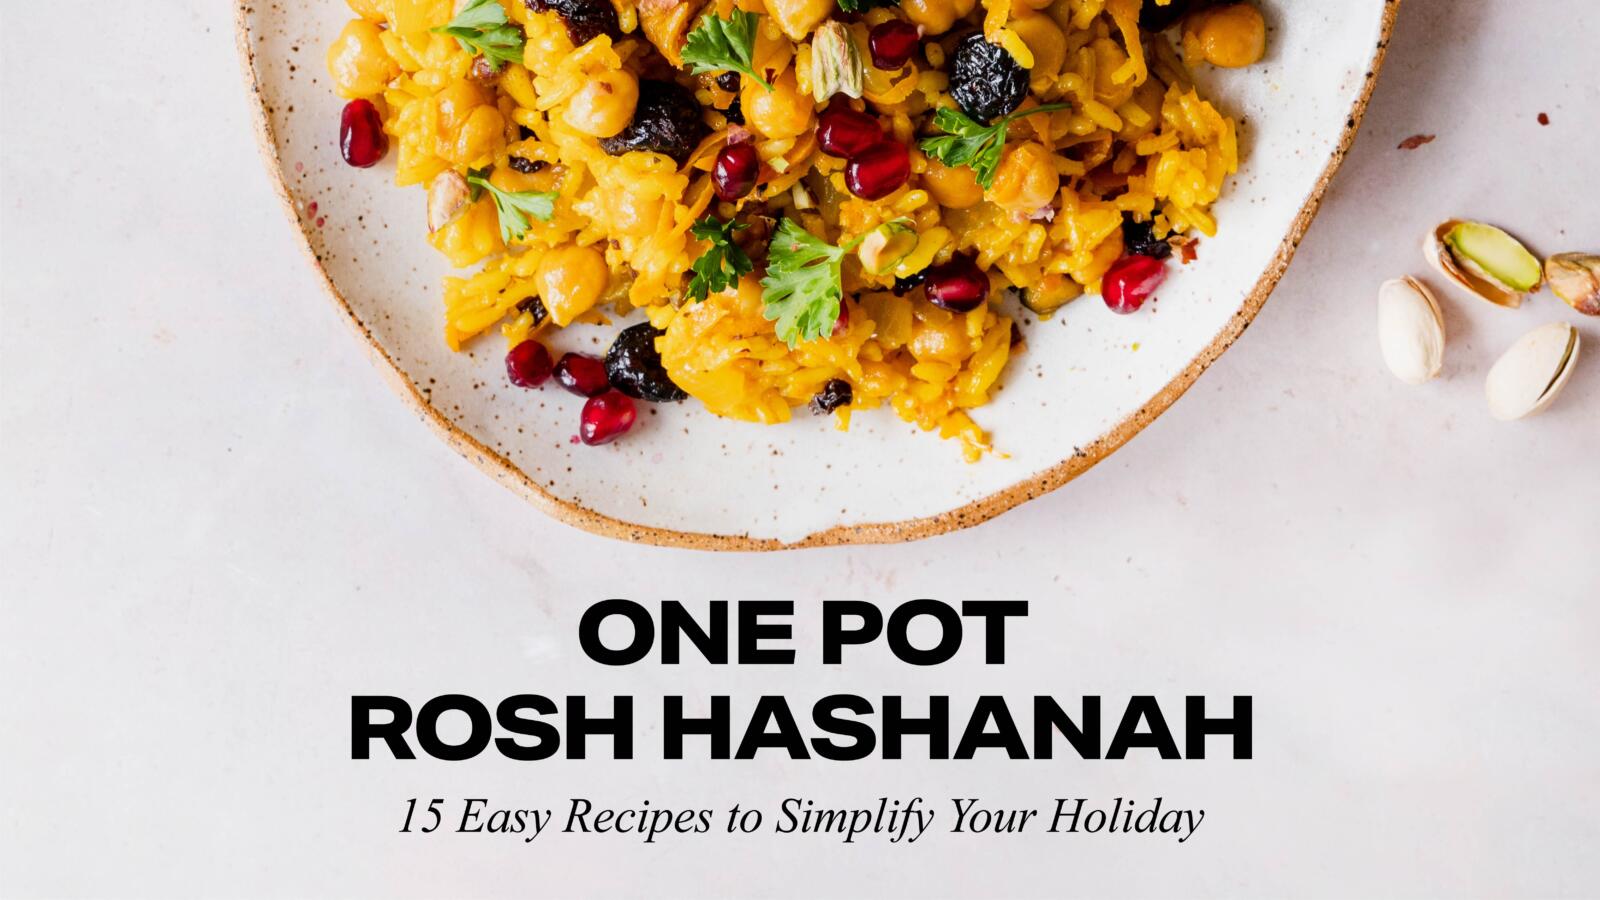 One Pot Rosh Hashanah Cookbook